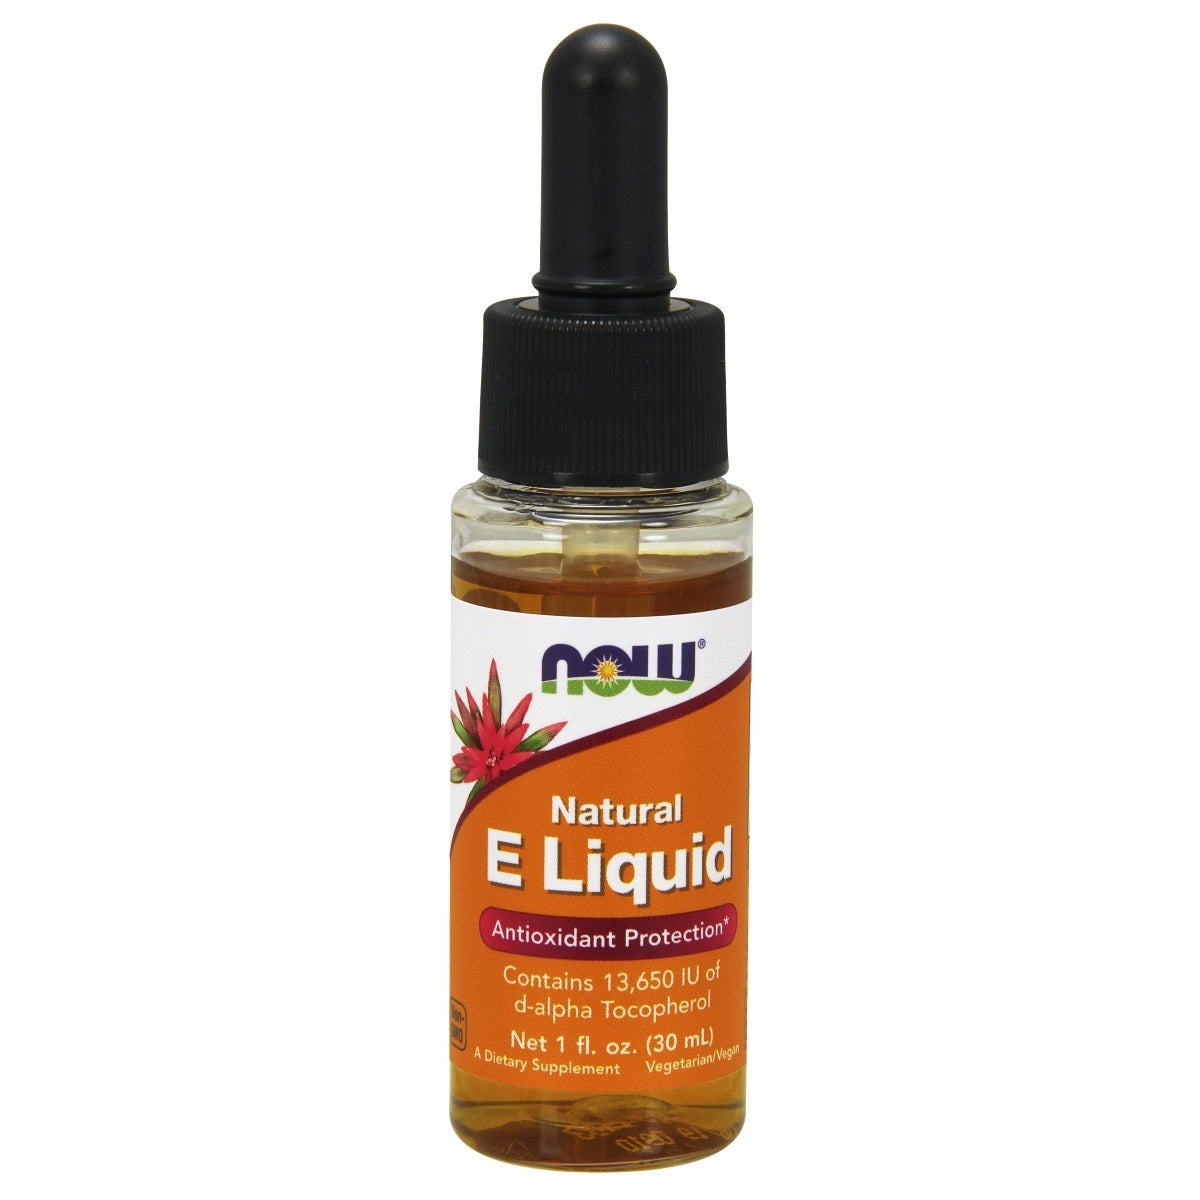 Primary image of Natural E Liquid